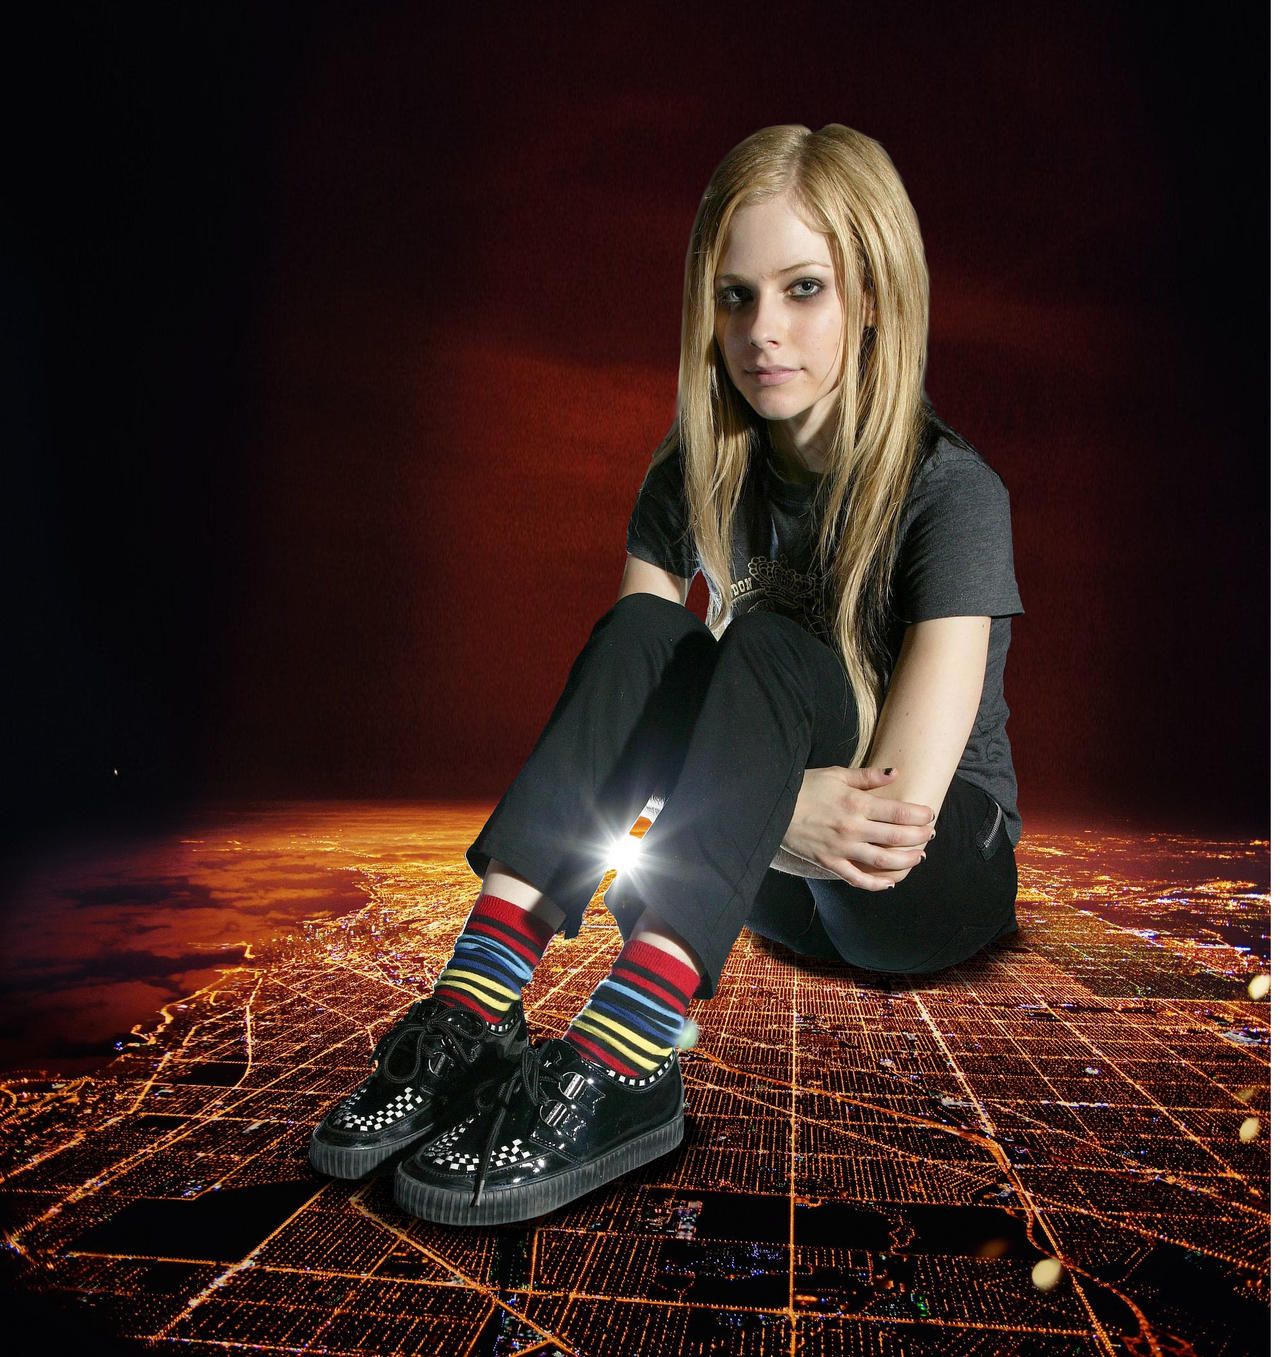 Belle Delphine Goes Full Avril Lavigne in this New Video